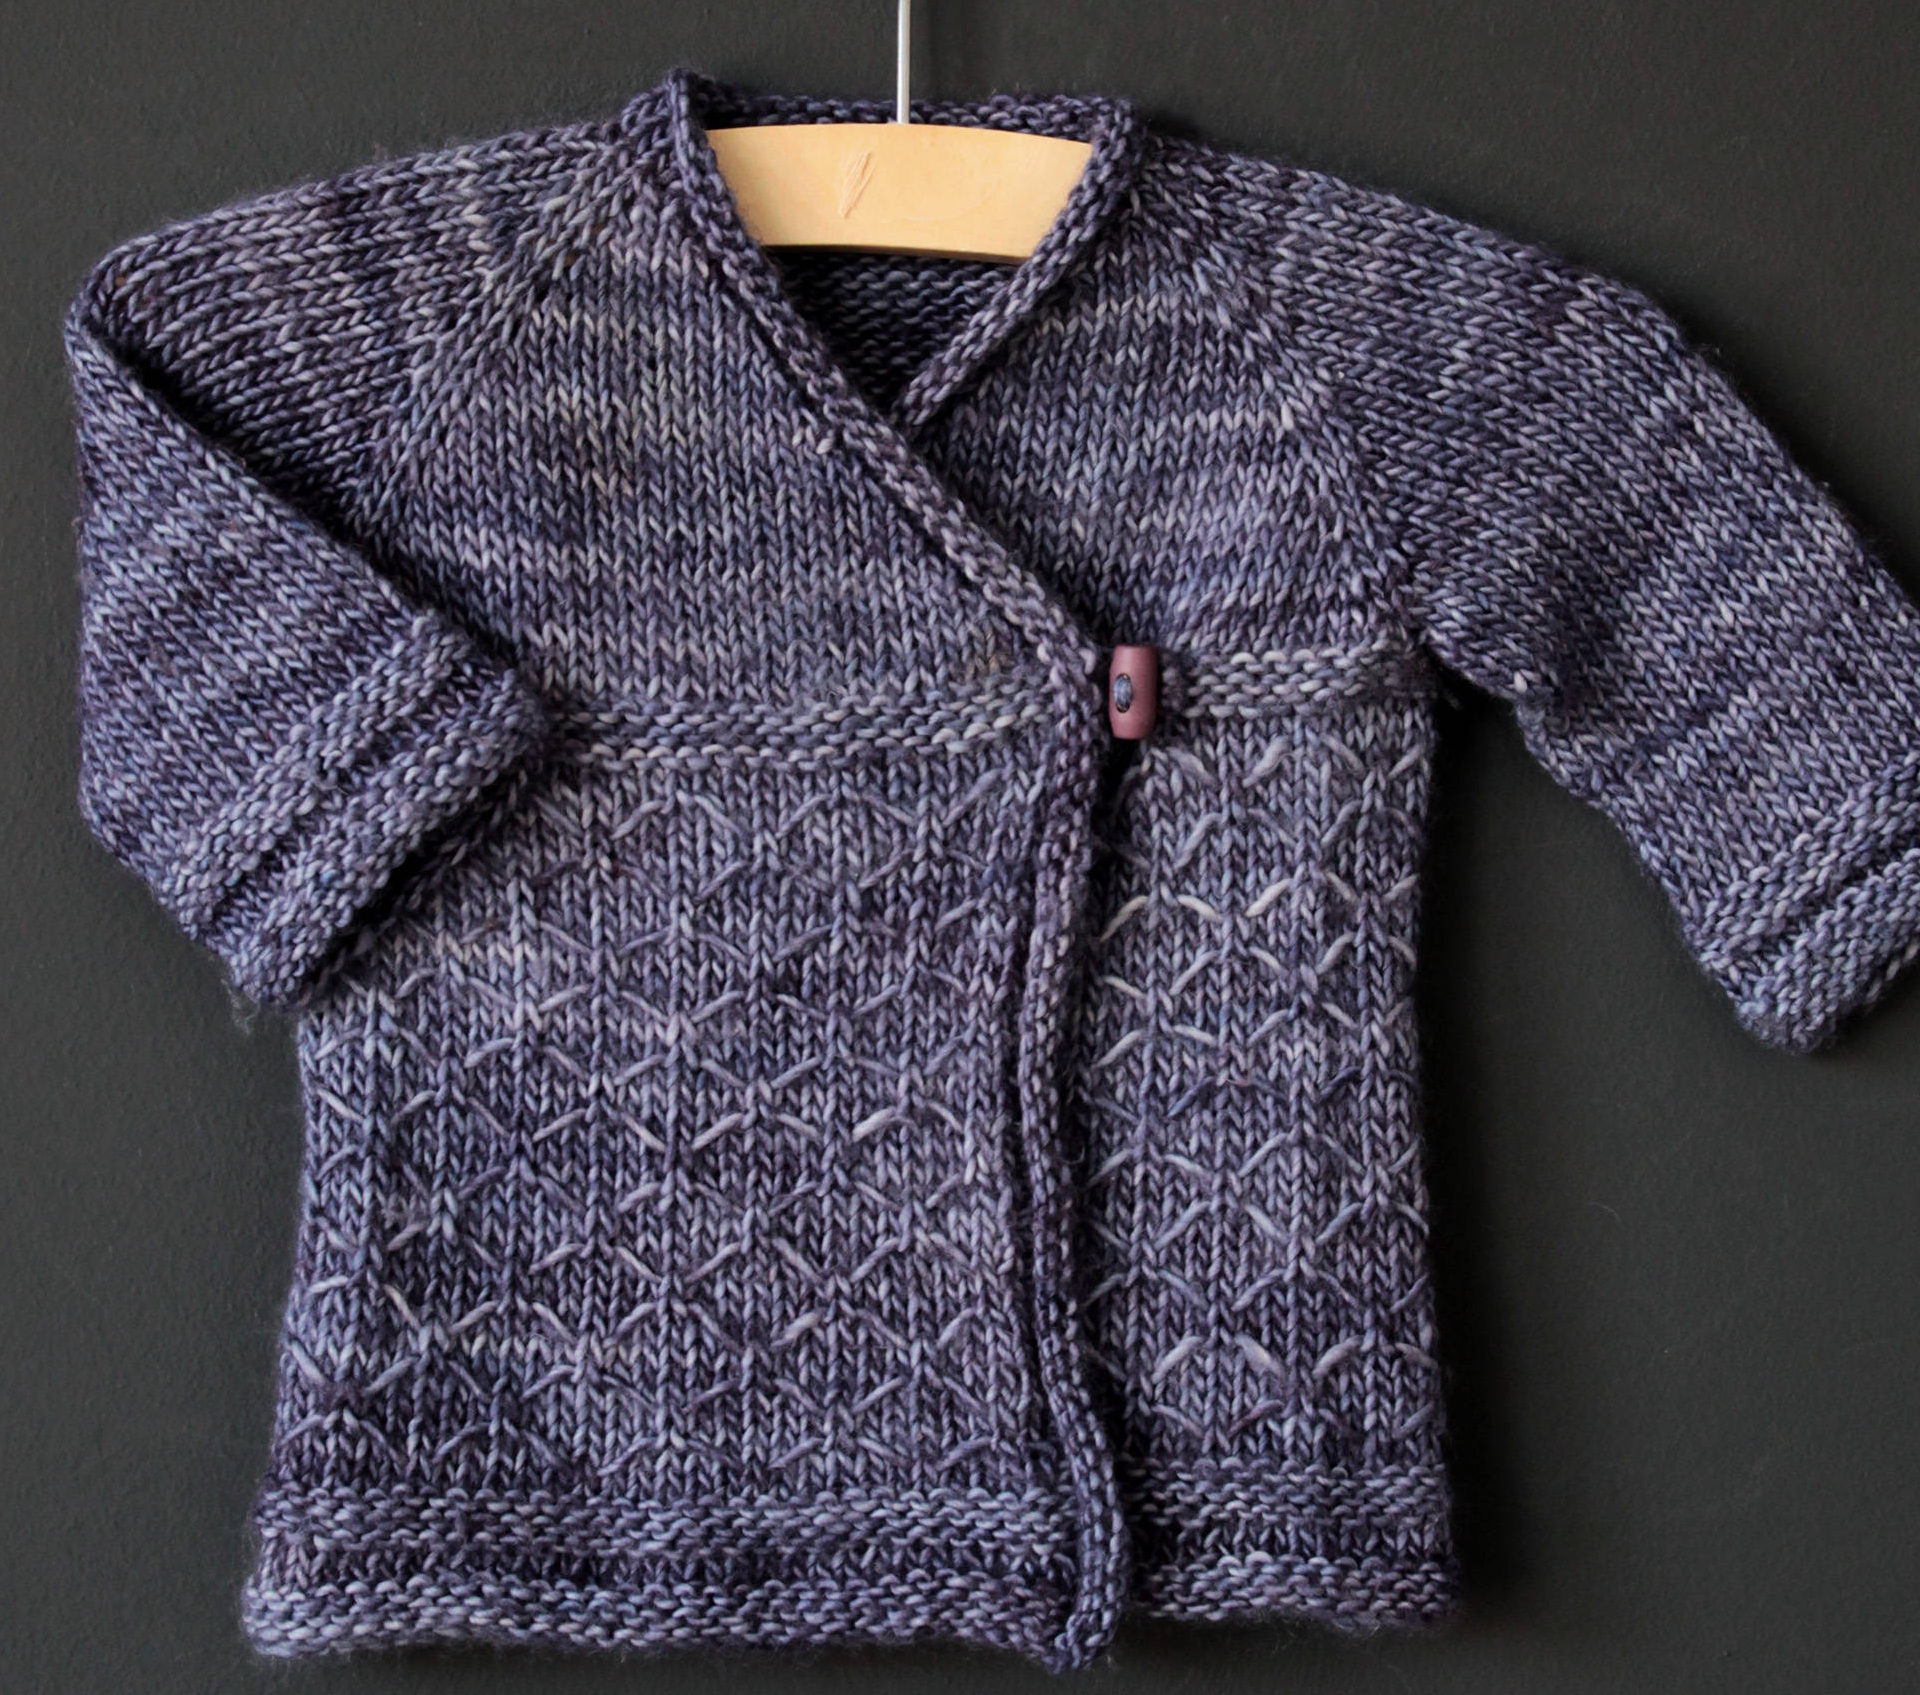 Kimono Sweater Knitting Pattern Ba Wrap Sweater Knitting Patterns In The Loop Knitting